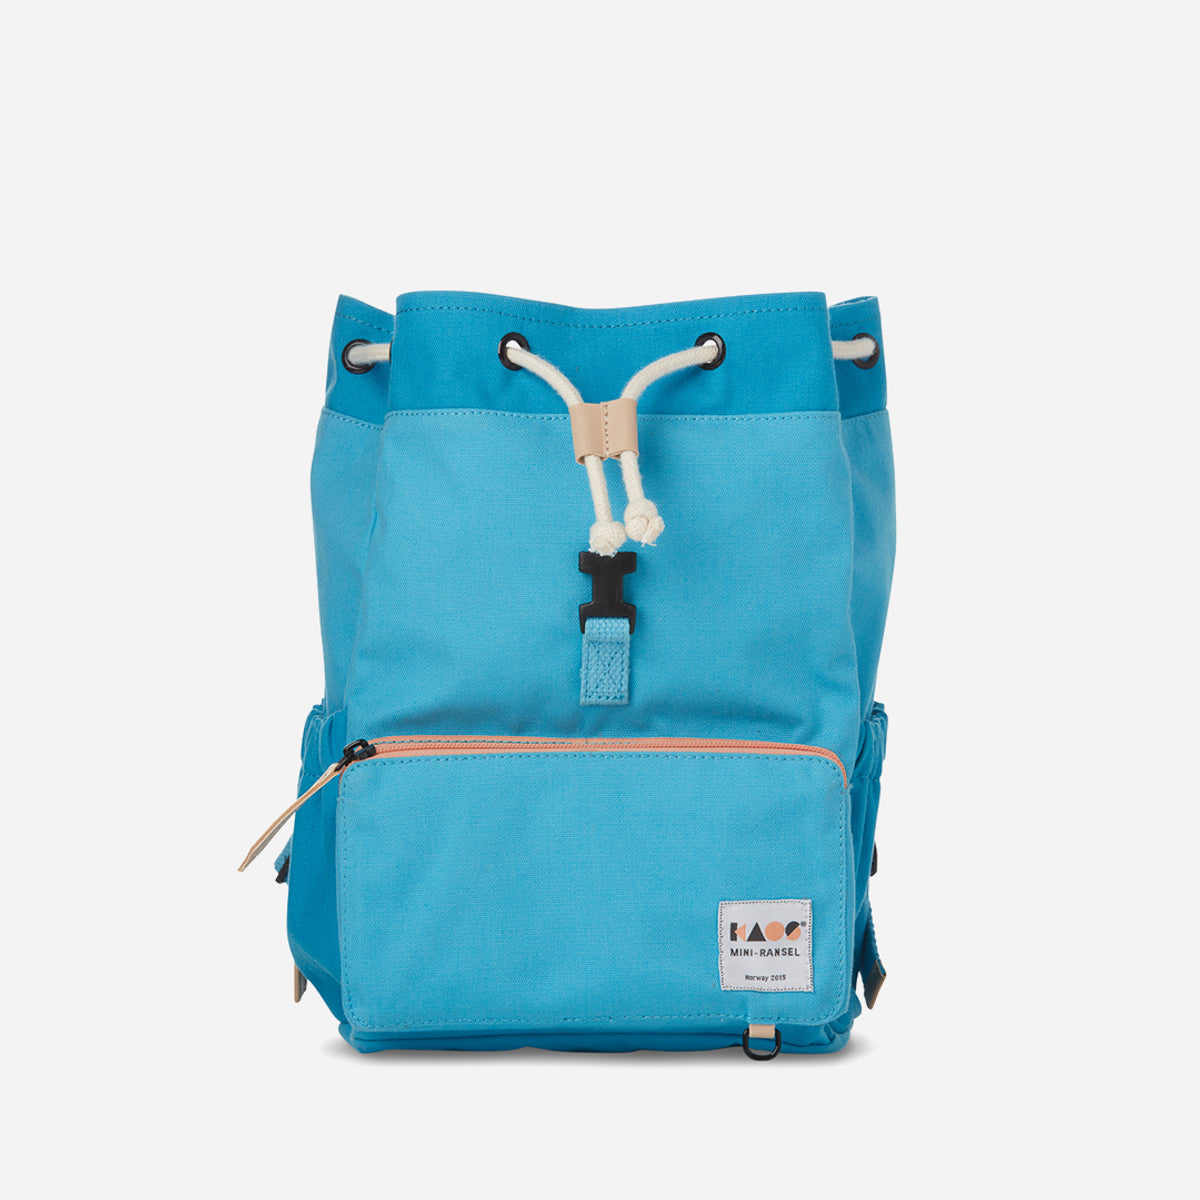 Blue Mini Ransel Kids Backpack